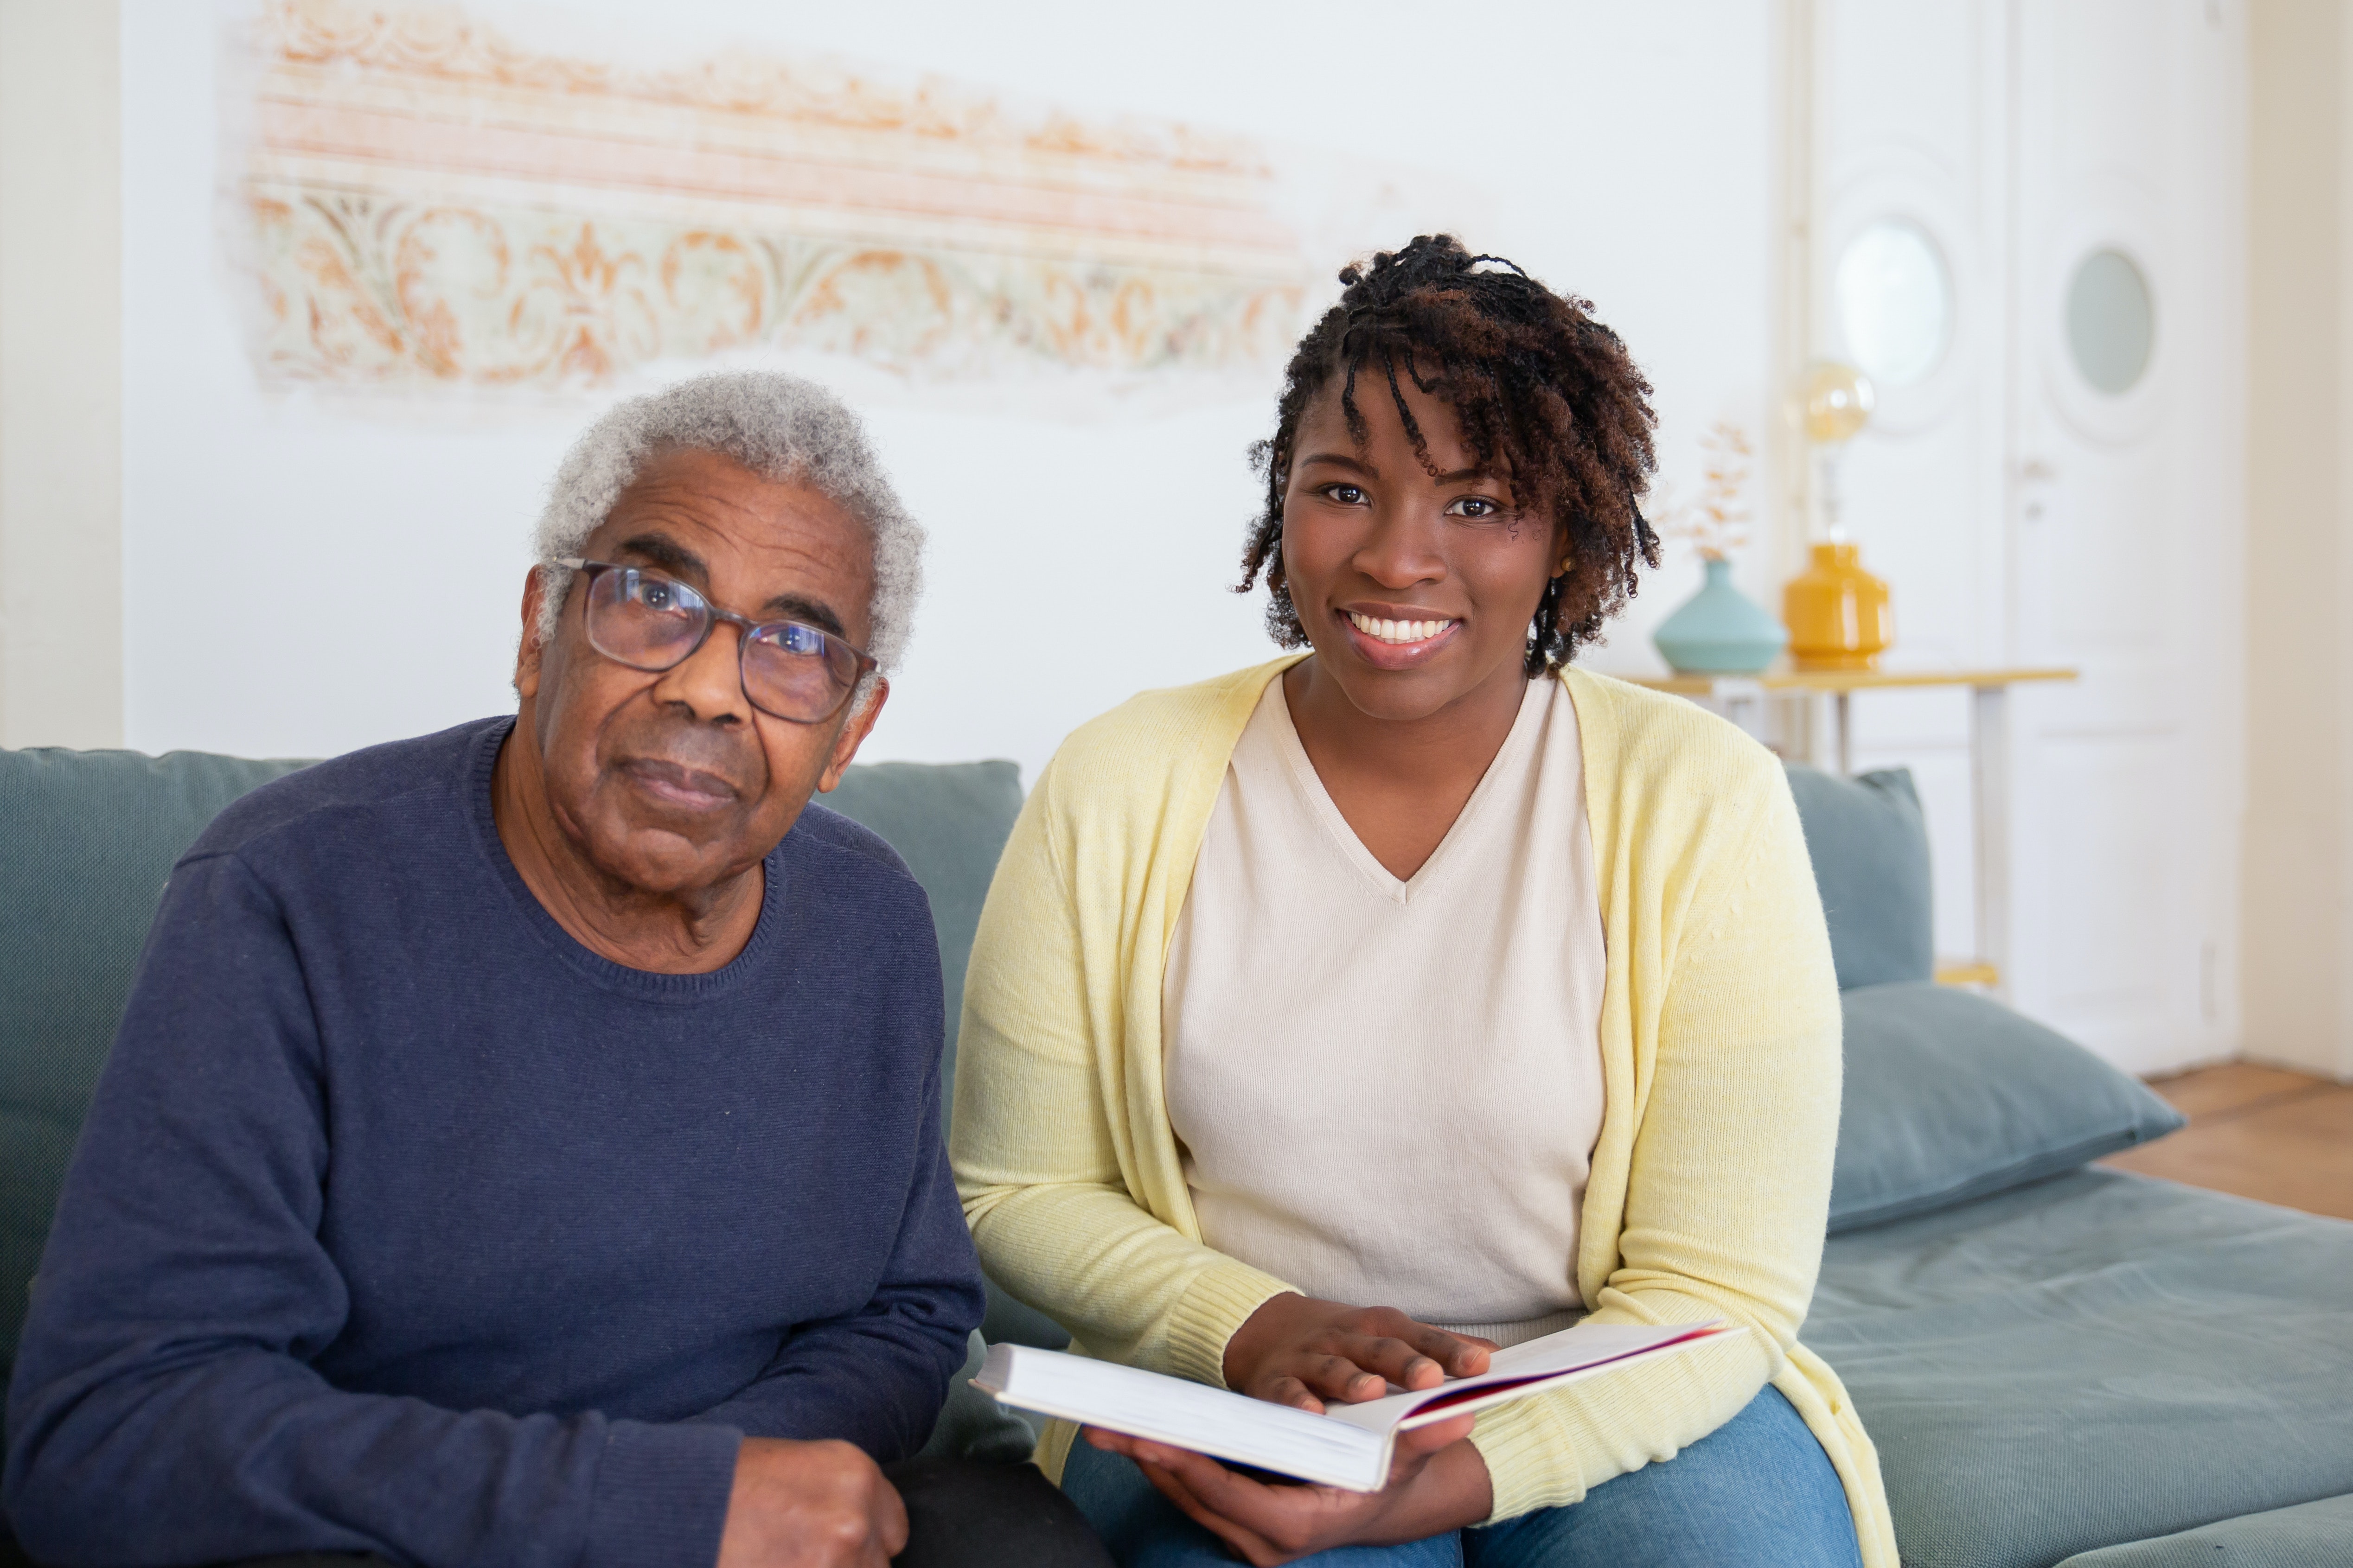 Seniors Home Care Blog | St. Louis Home Care